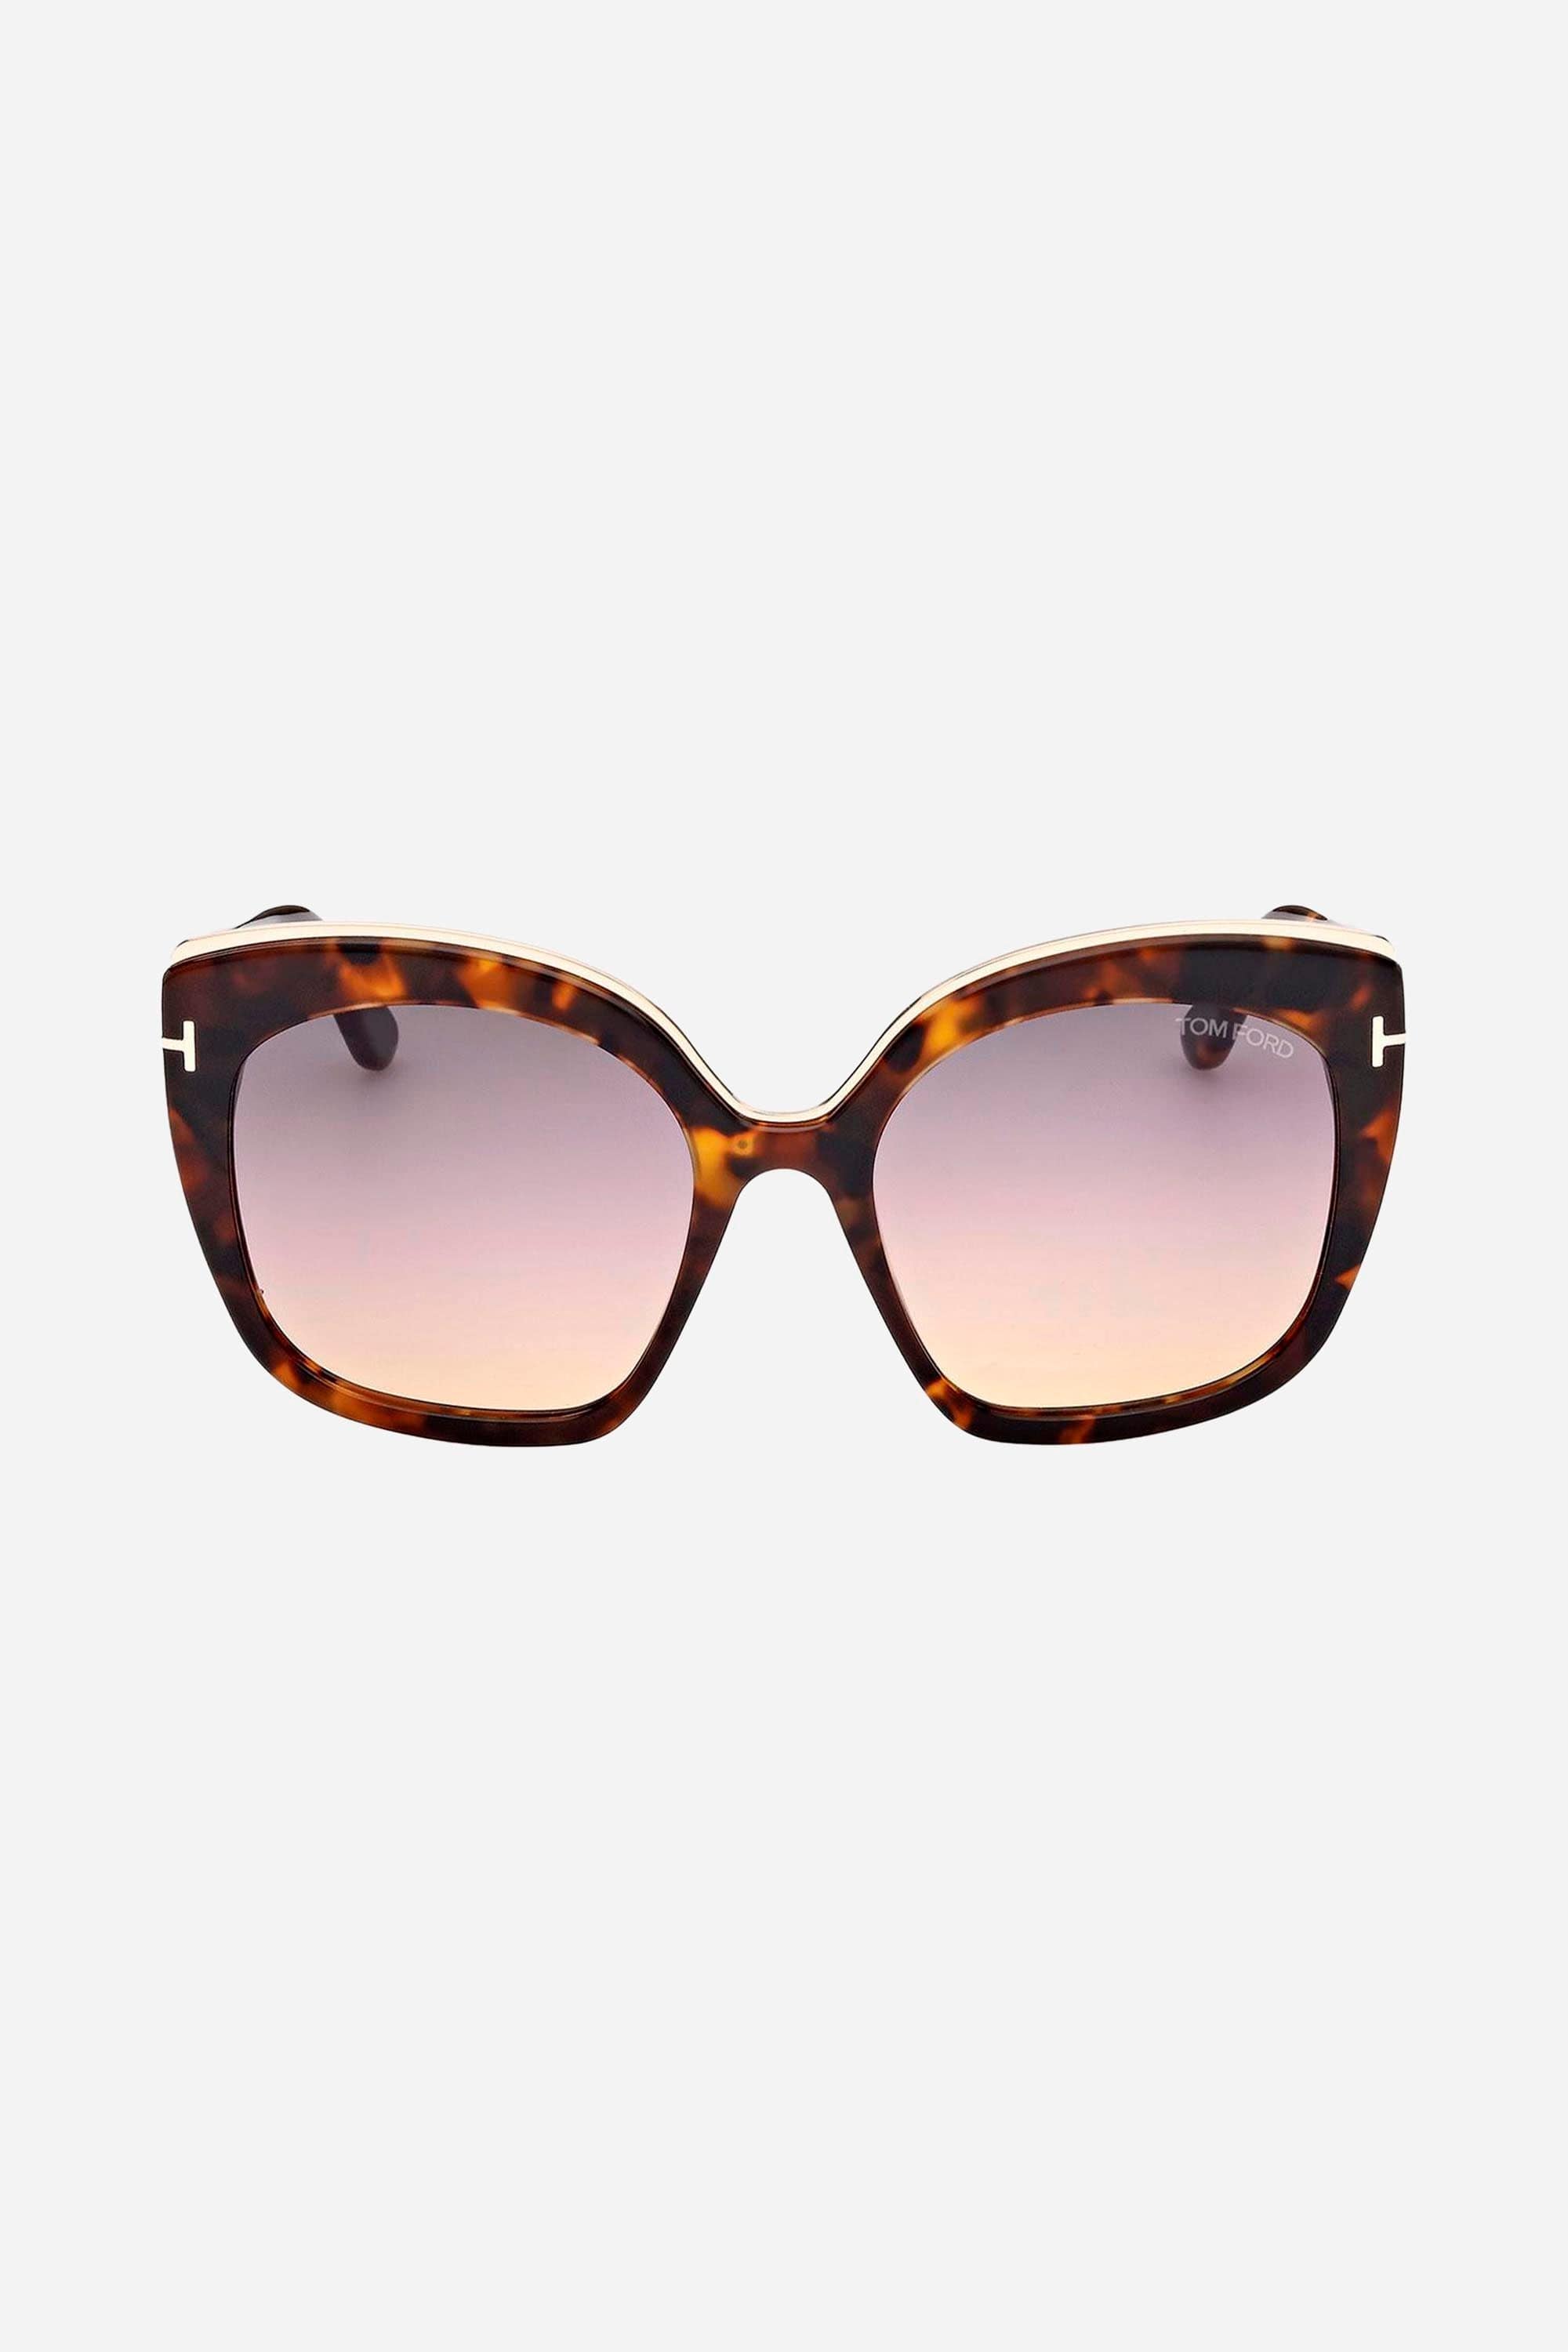 Tom Ford cat eye feminine sunglasses in havana - Eyewear Club